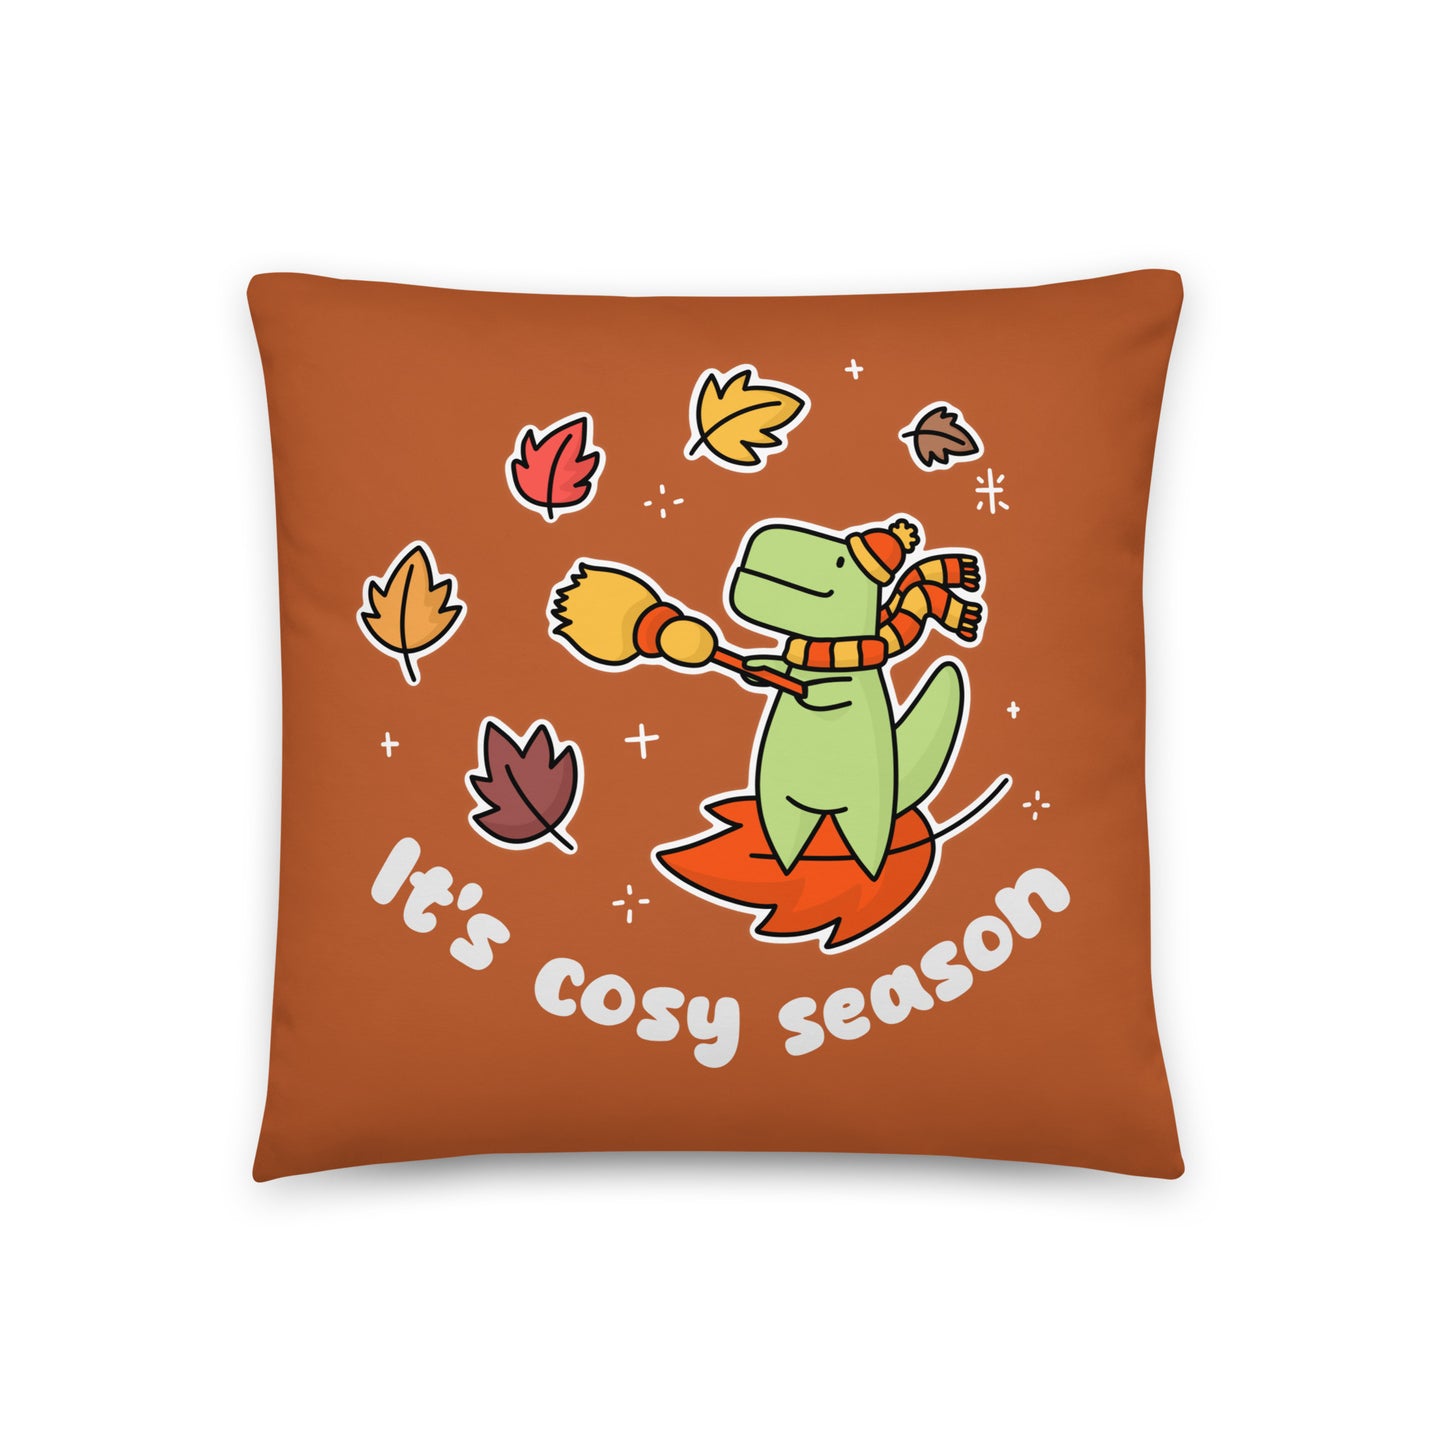 It's Cosy Season Pillow